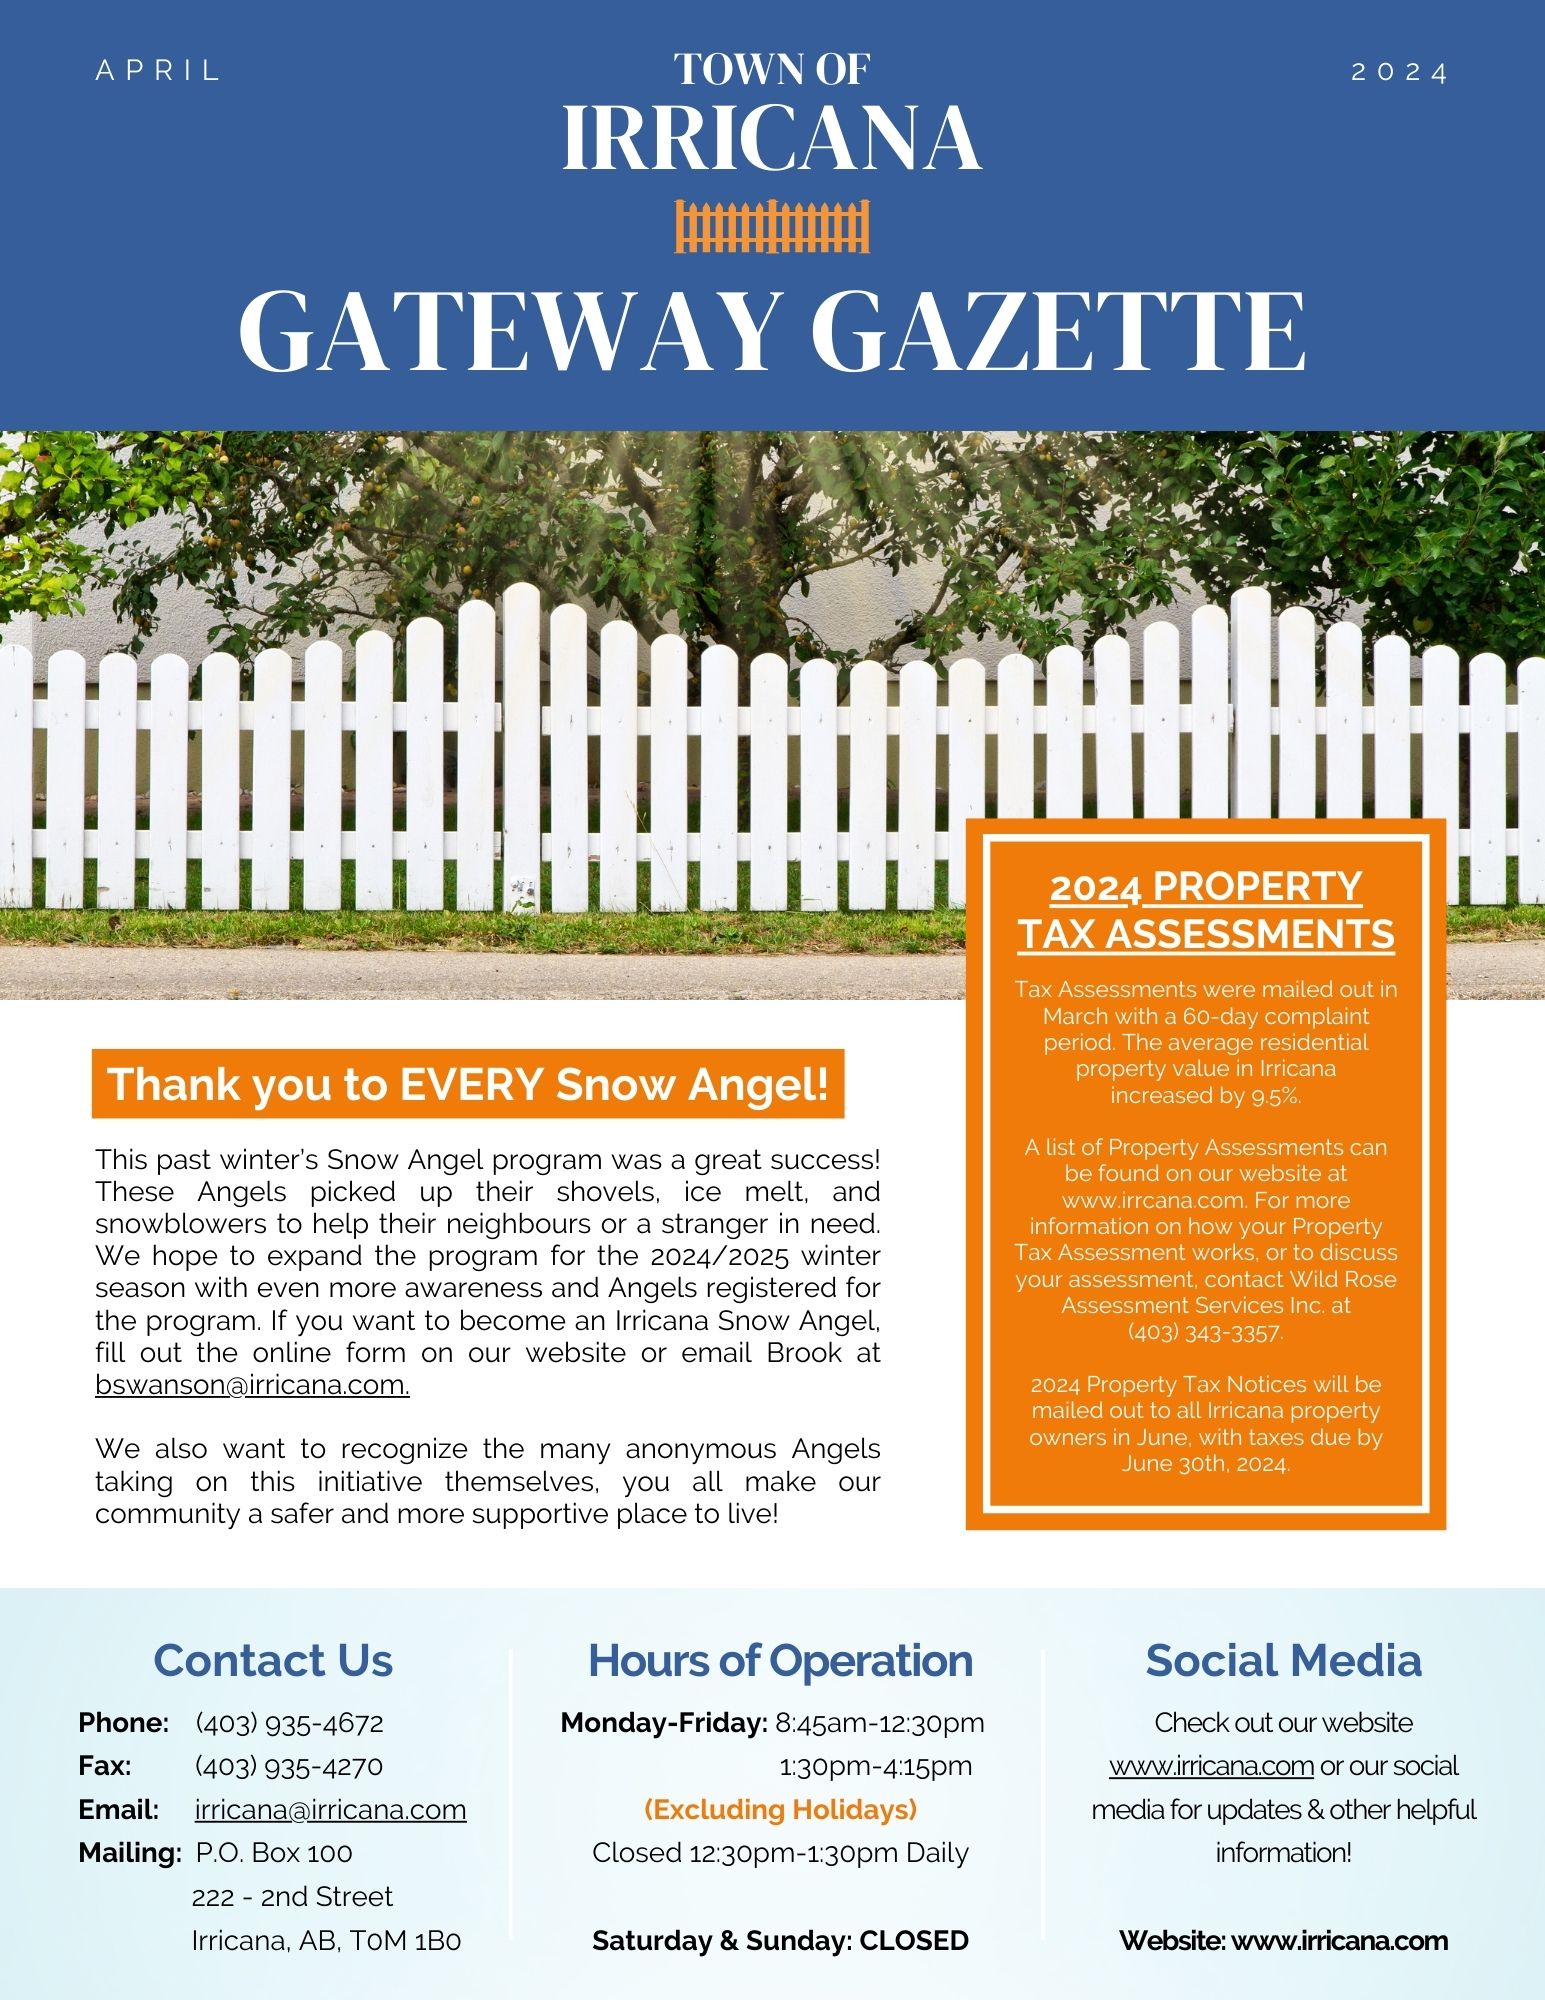 Town of Irricana Gateway Gazette Newsletter April 2024